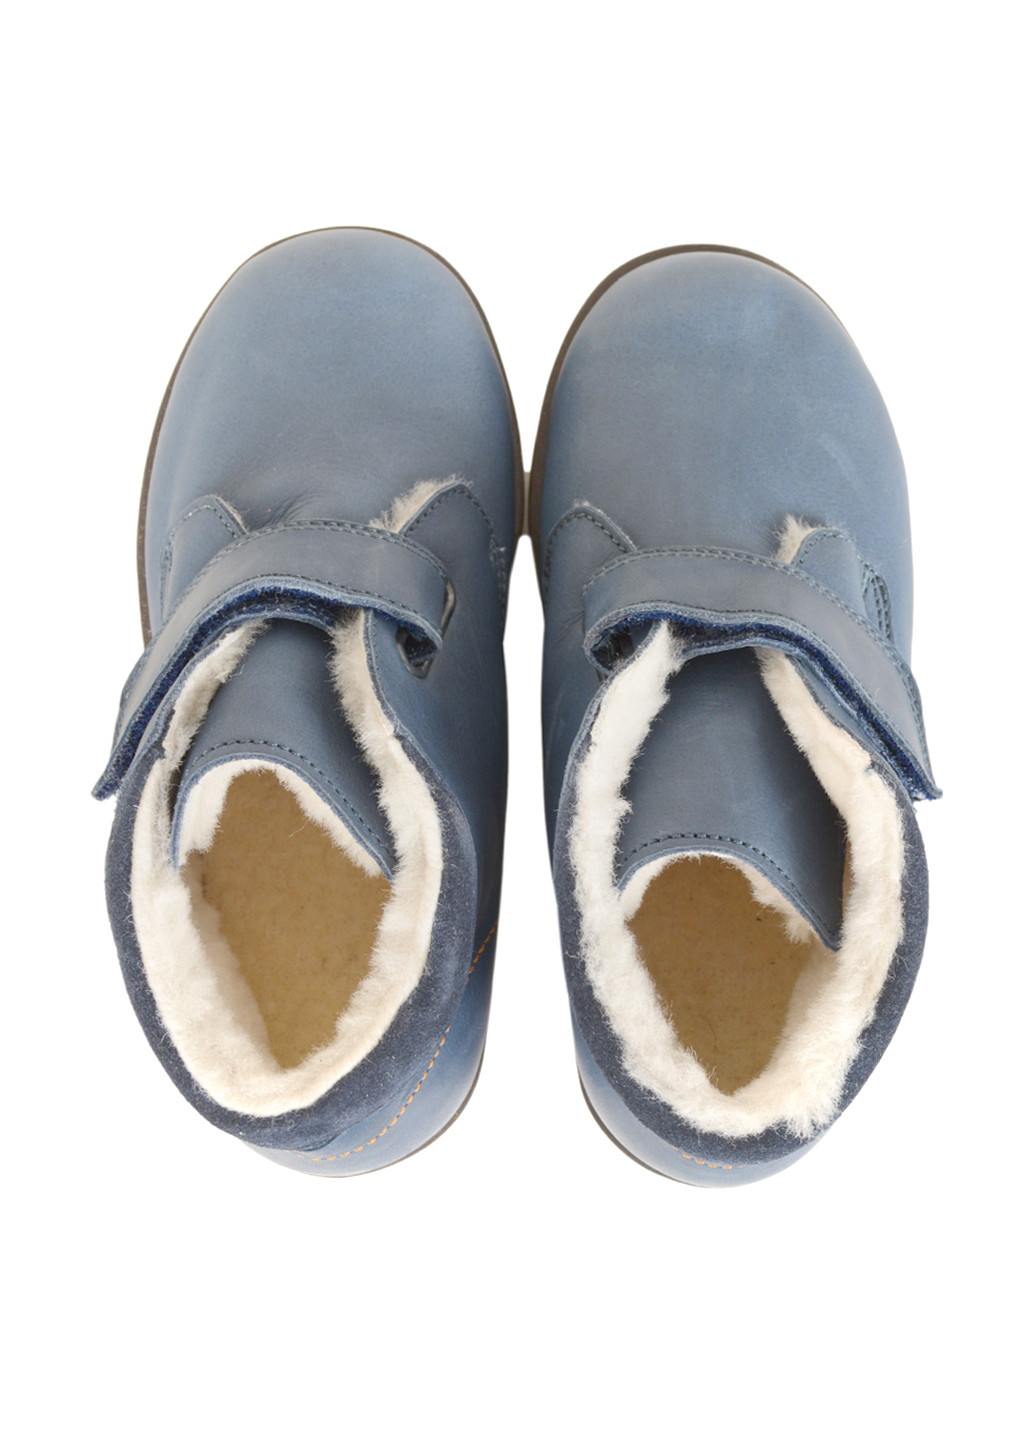 Голубые кэжуал зимние ботинки Naturino